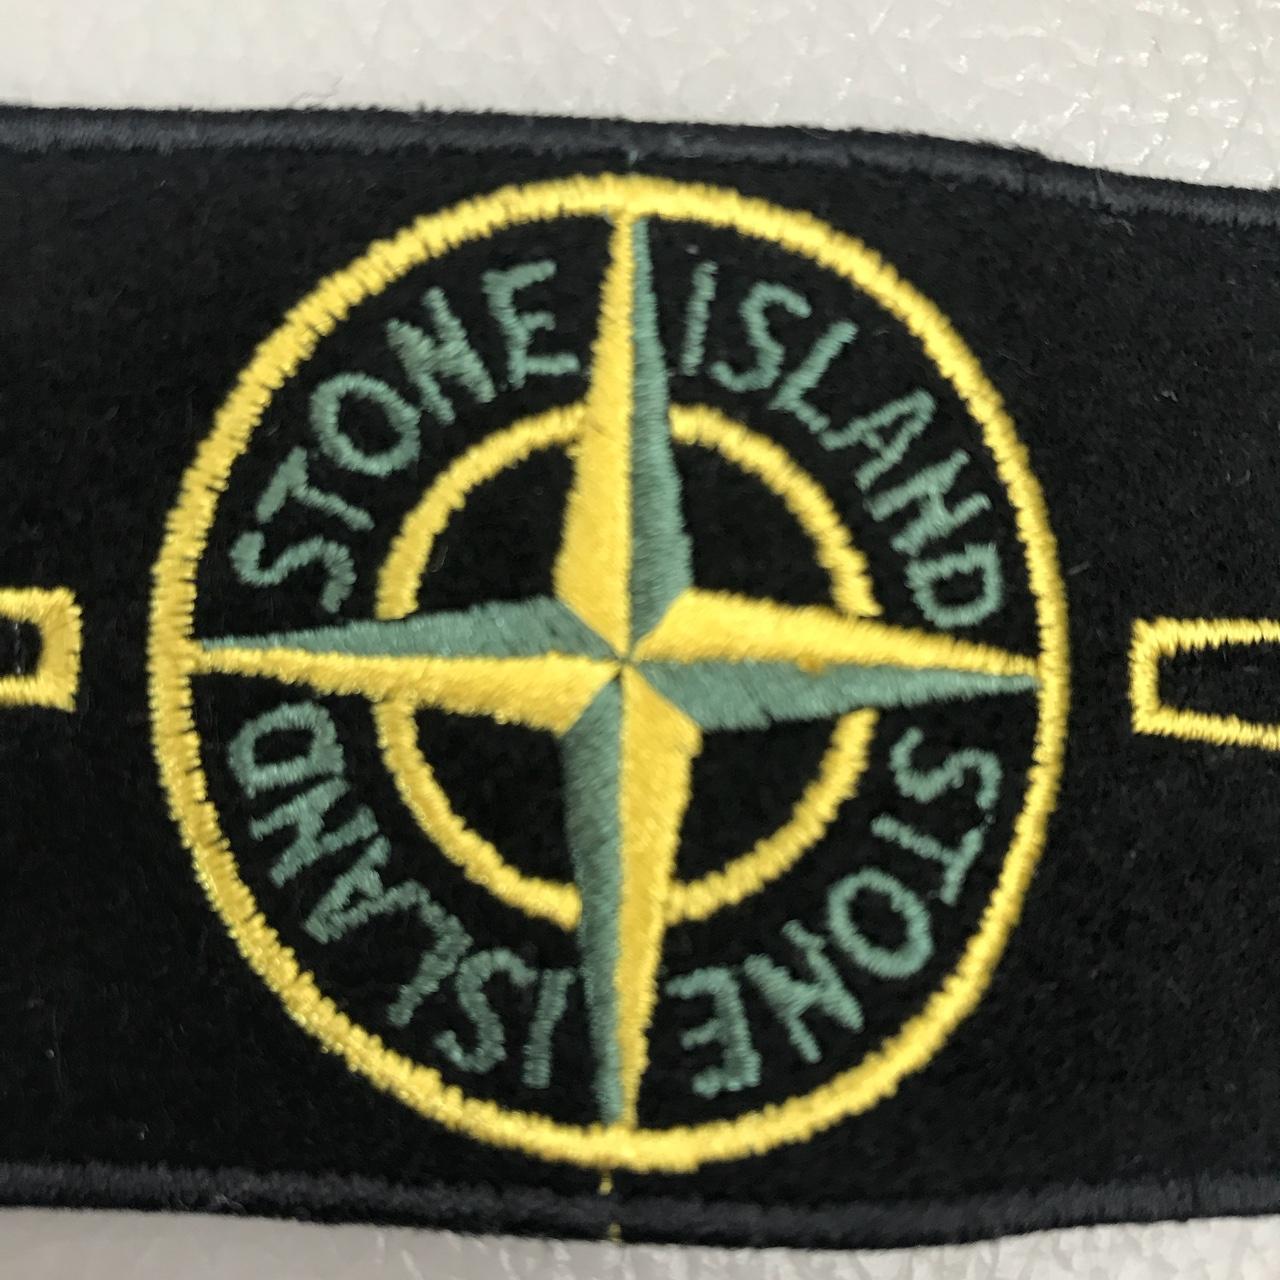 Genuine Stone Island Badge Stoney Stoneisland Depop